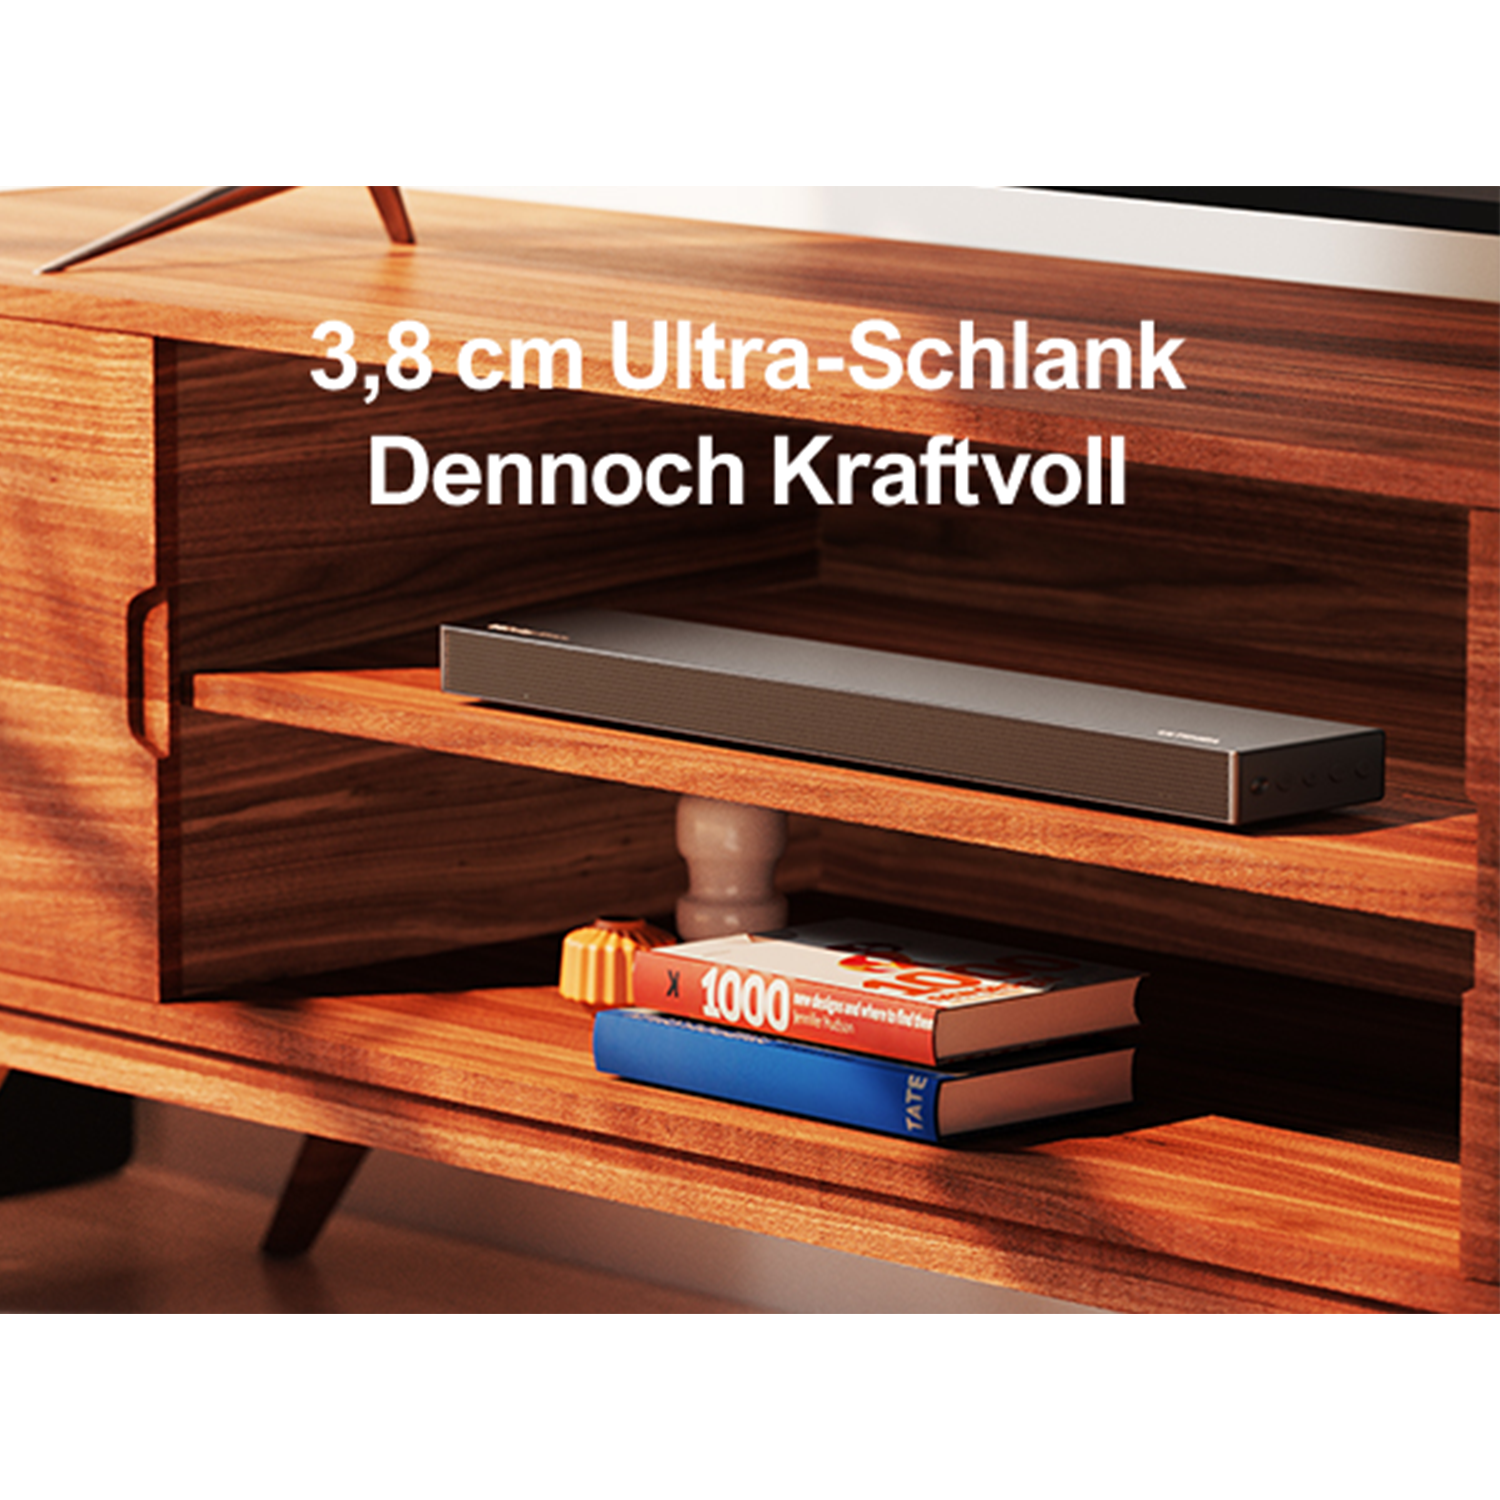 Kanal, Schwarz ULTIMEA mit Atmos TV Dolby Dolby für - Atmos Geräte Soundbar Subwoofer, Soundbar S50 2.1 Nova -